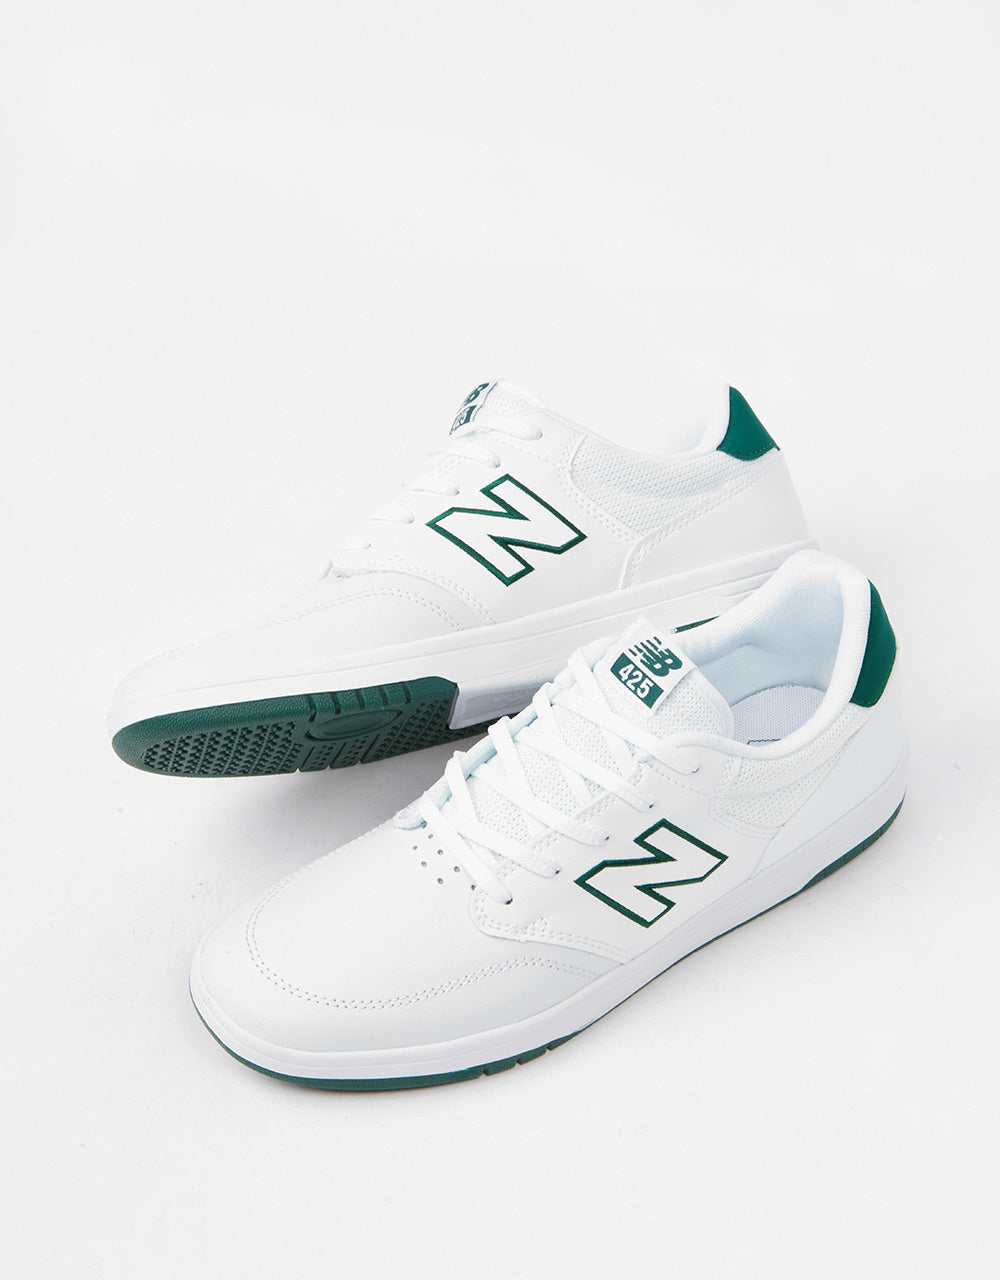 New Balance Numeric 425 Skate Shoes - White/Green